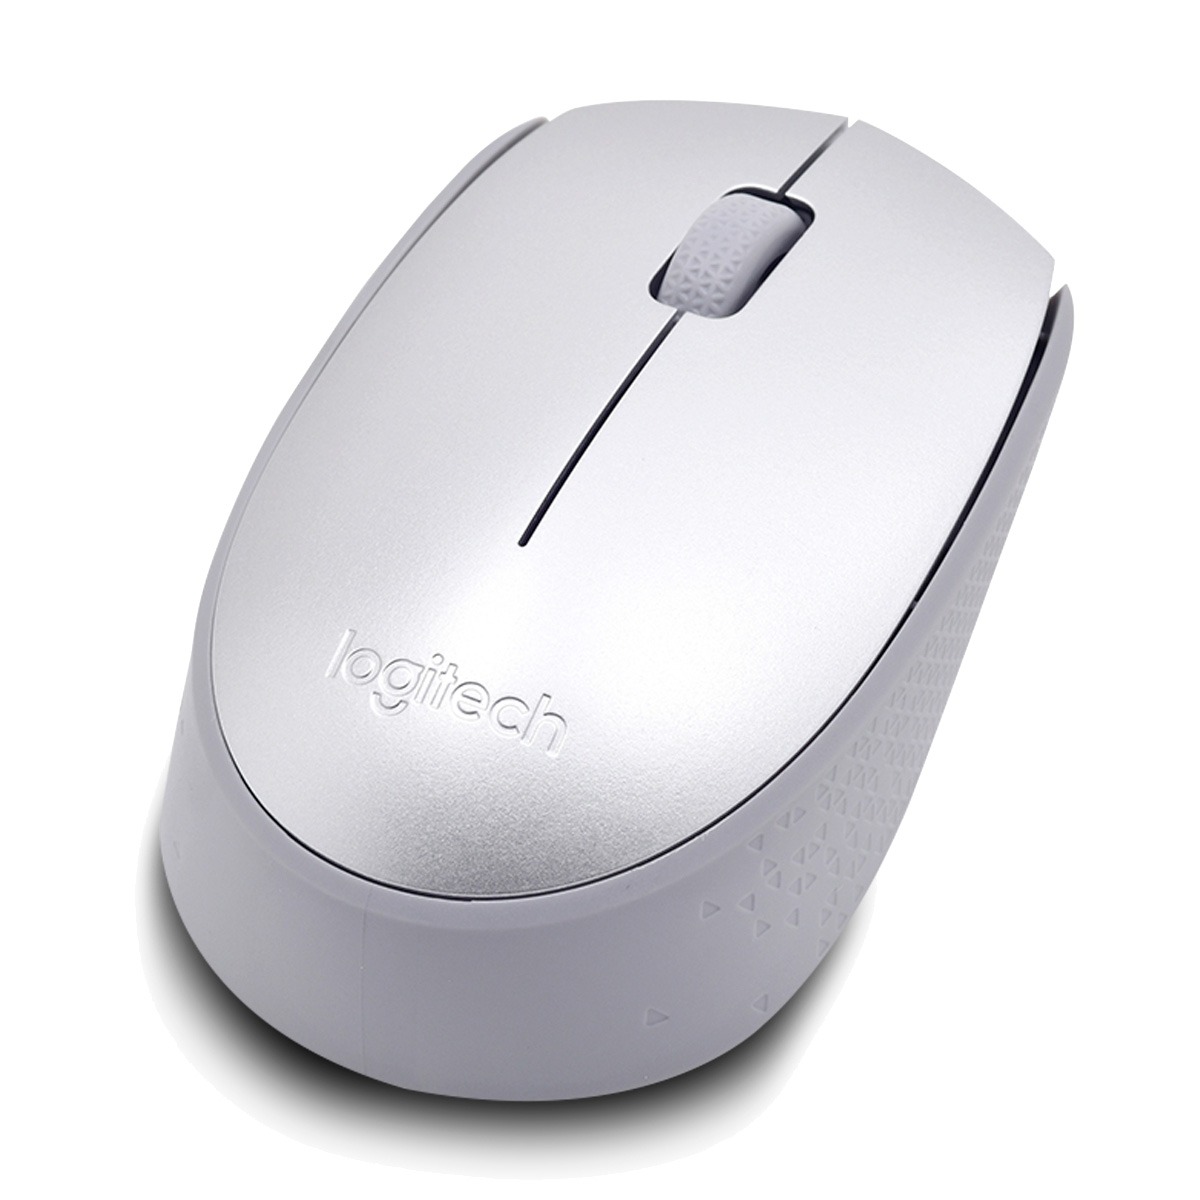 Mouse UsbWireless Prata M170 (910-005334) - Logitech